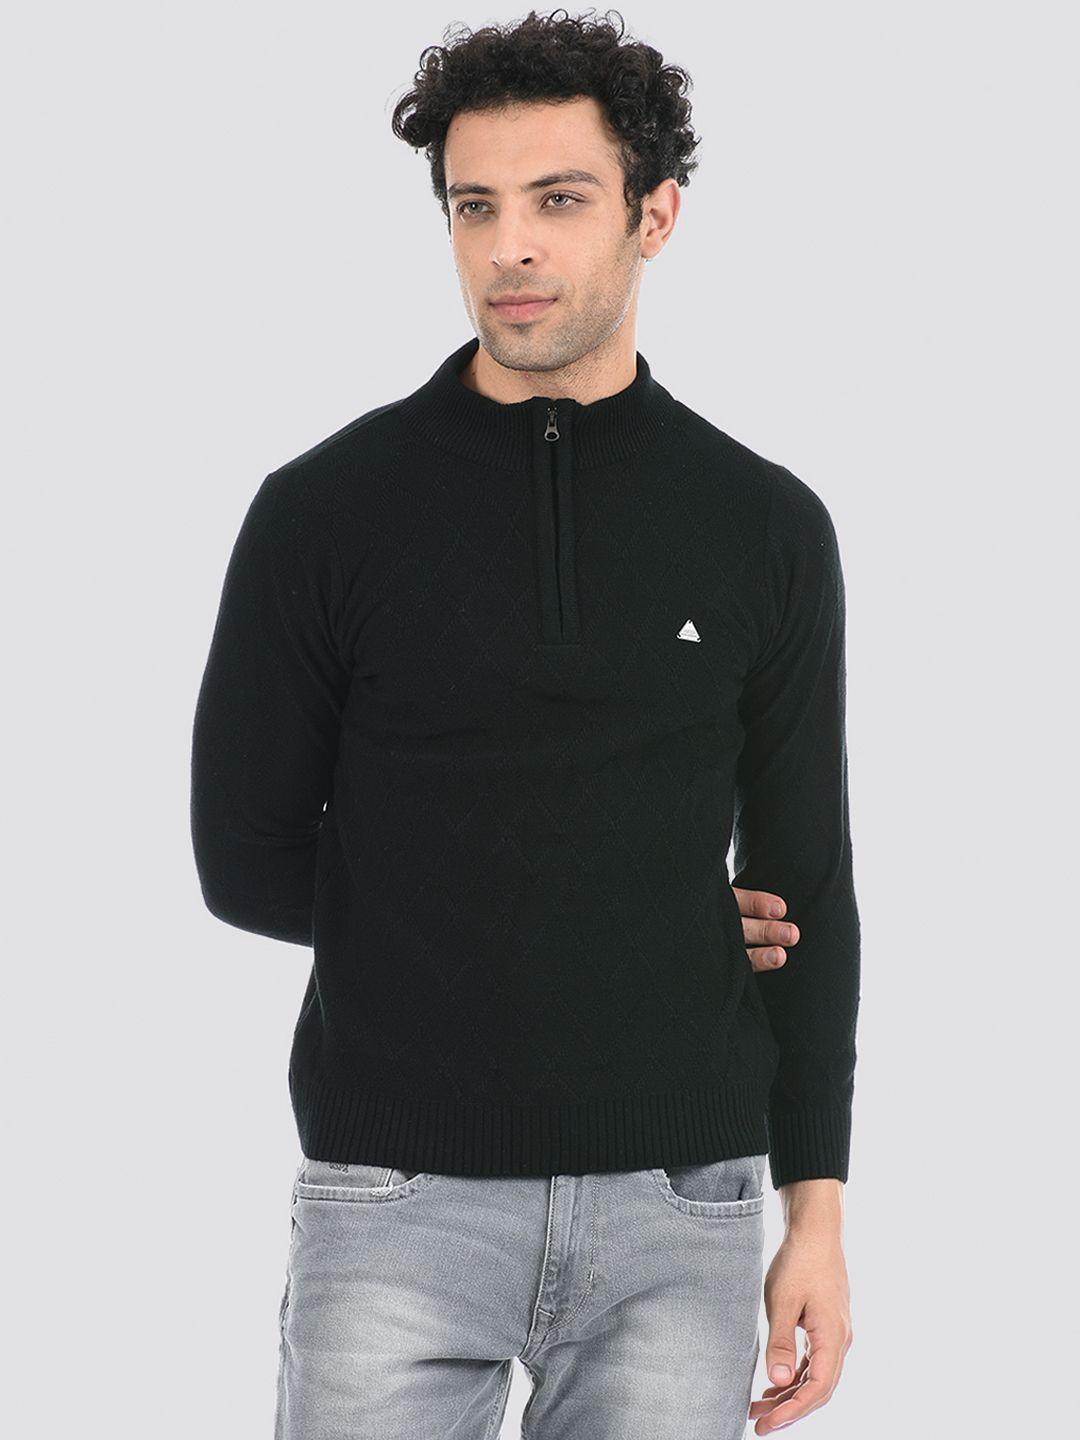 cloak & decker by monte carlo men black acrylic pullover sweater